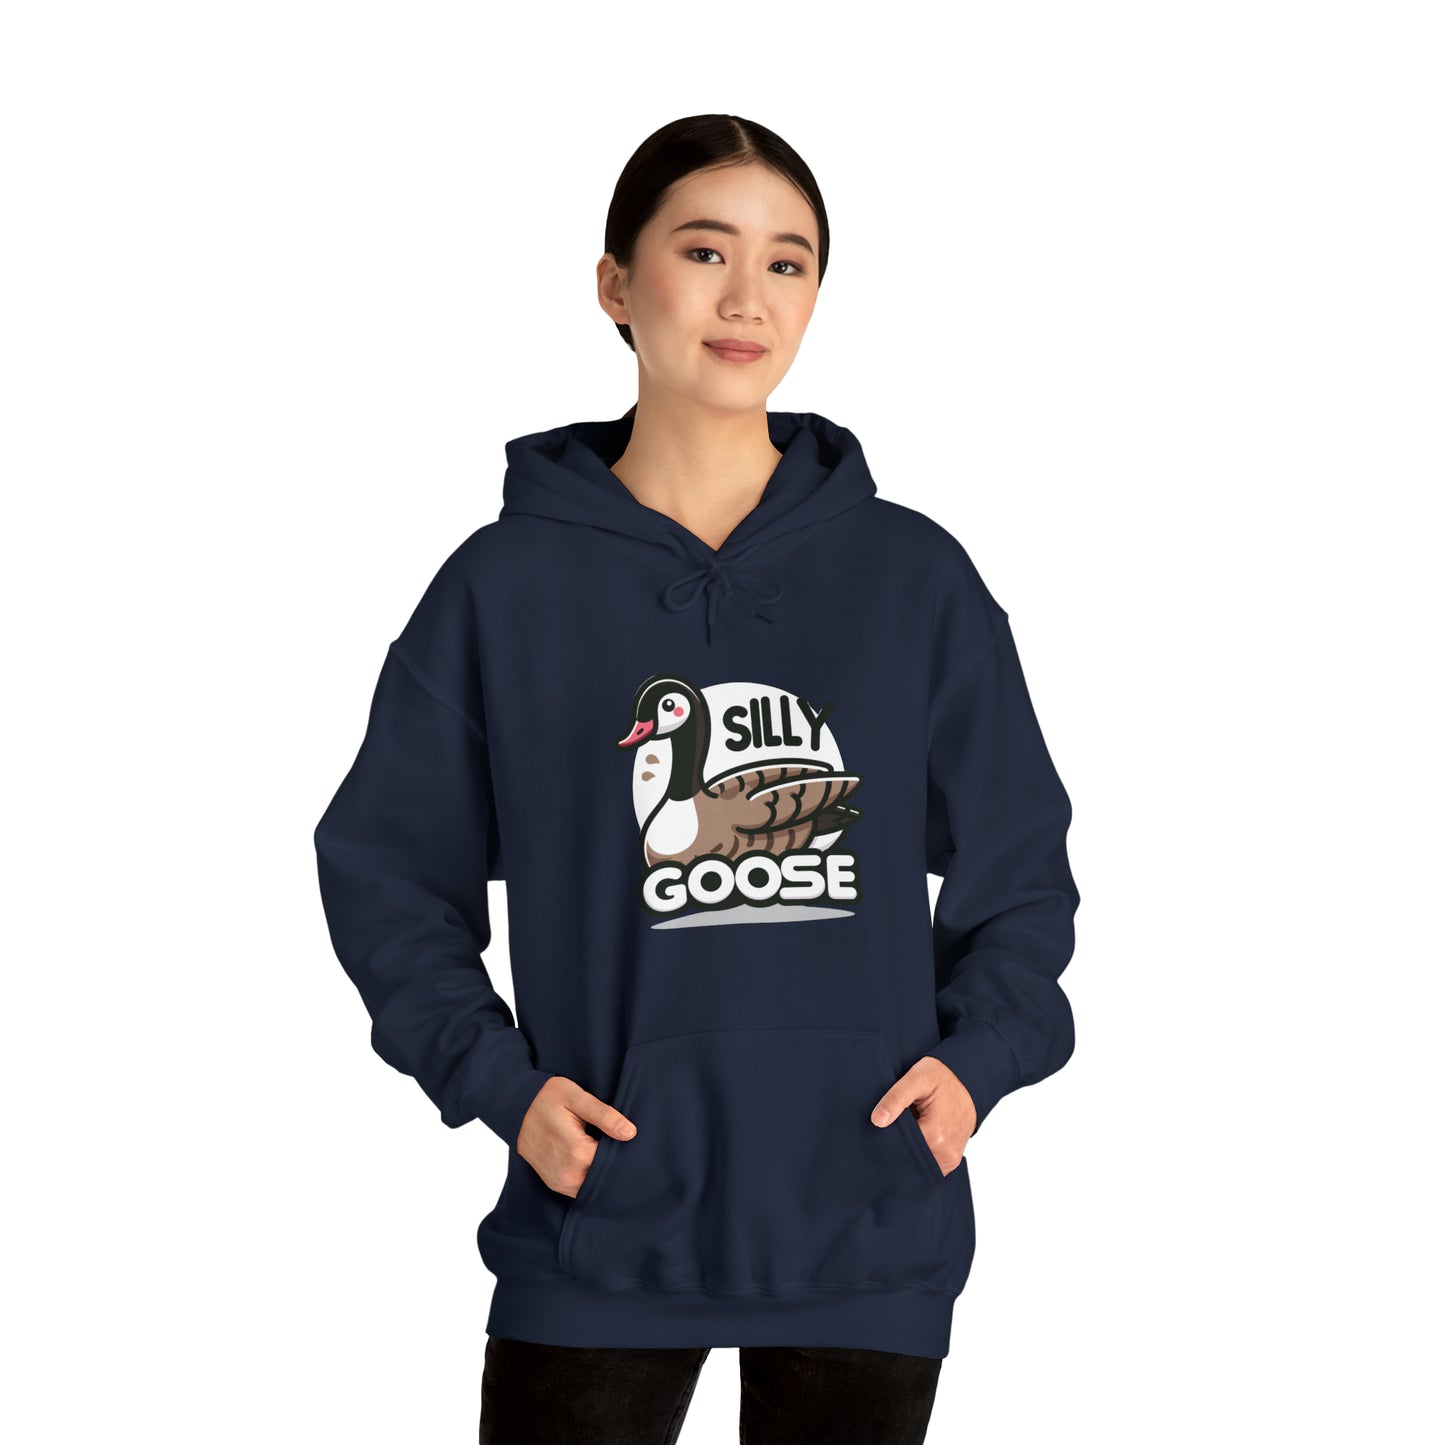 Silly Goose Hooded Sweatshirt